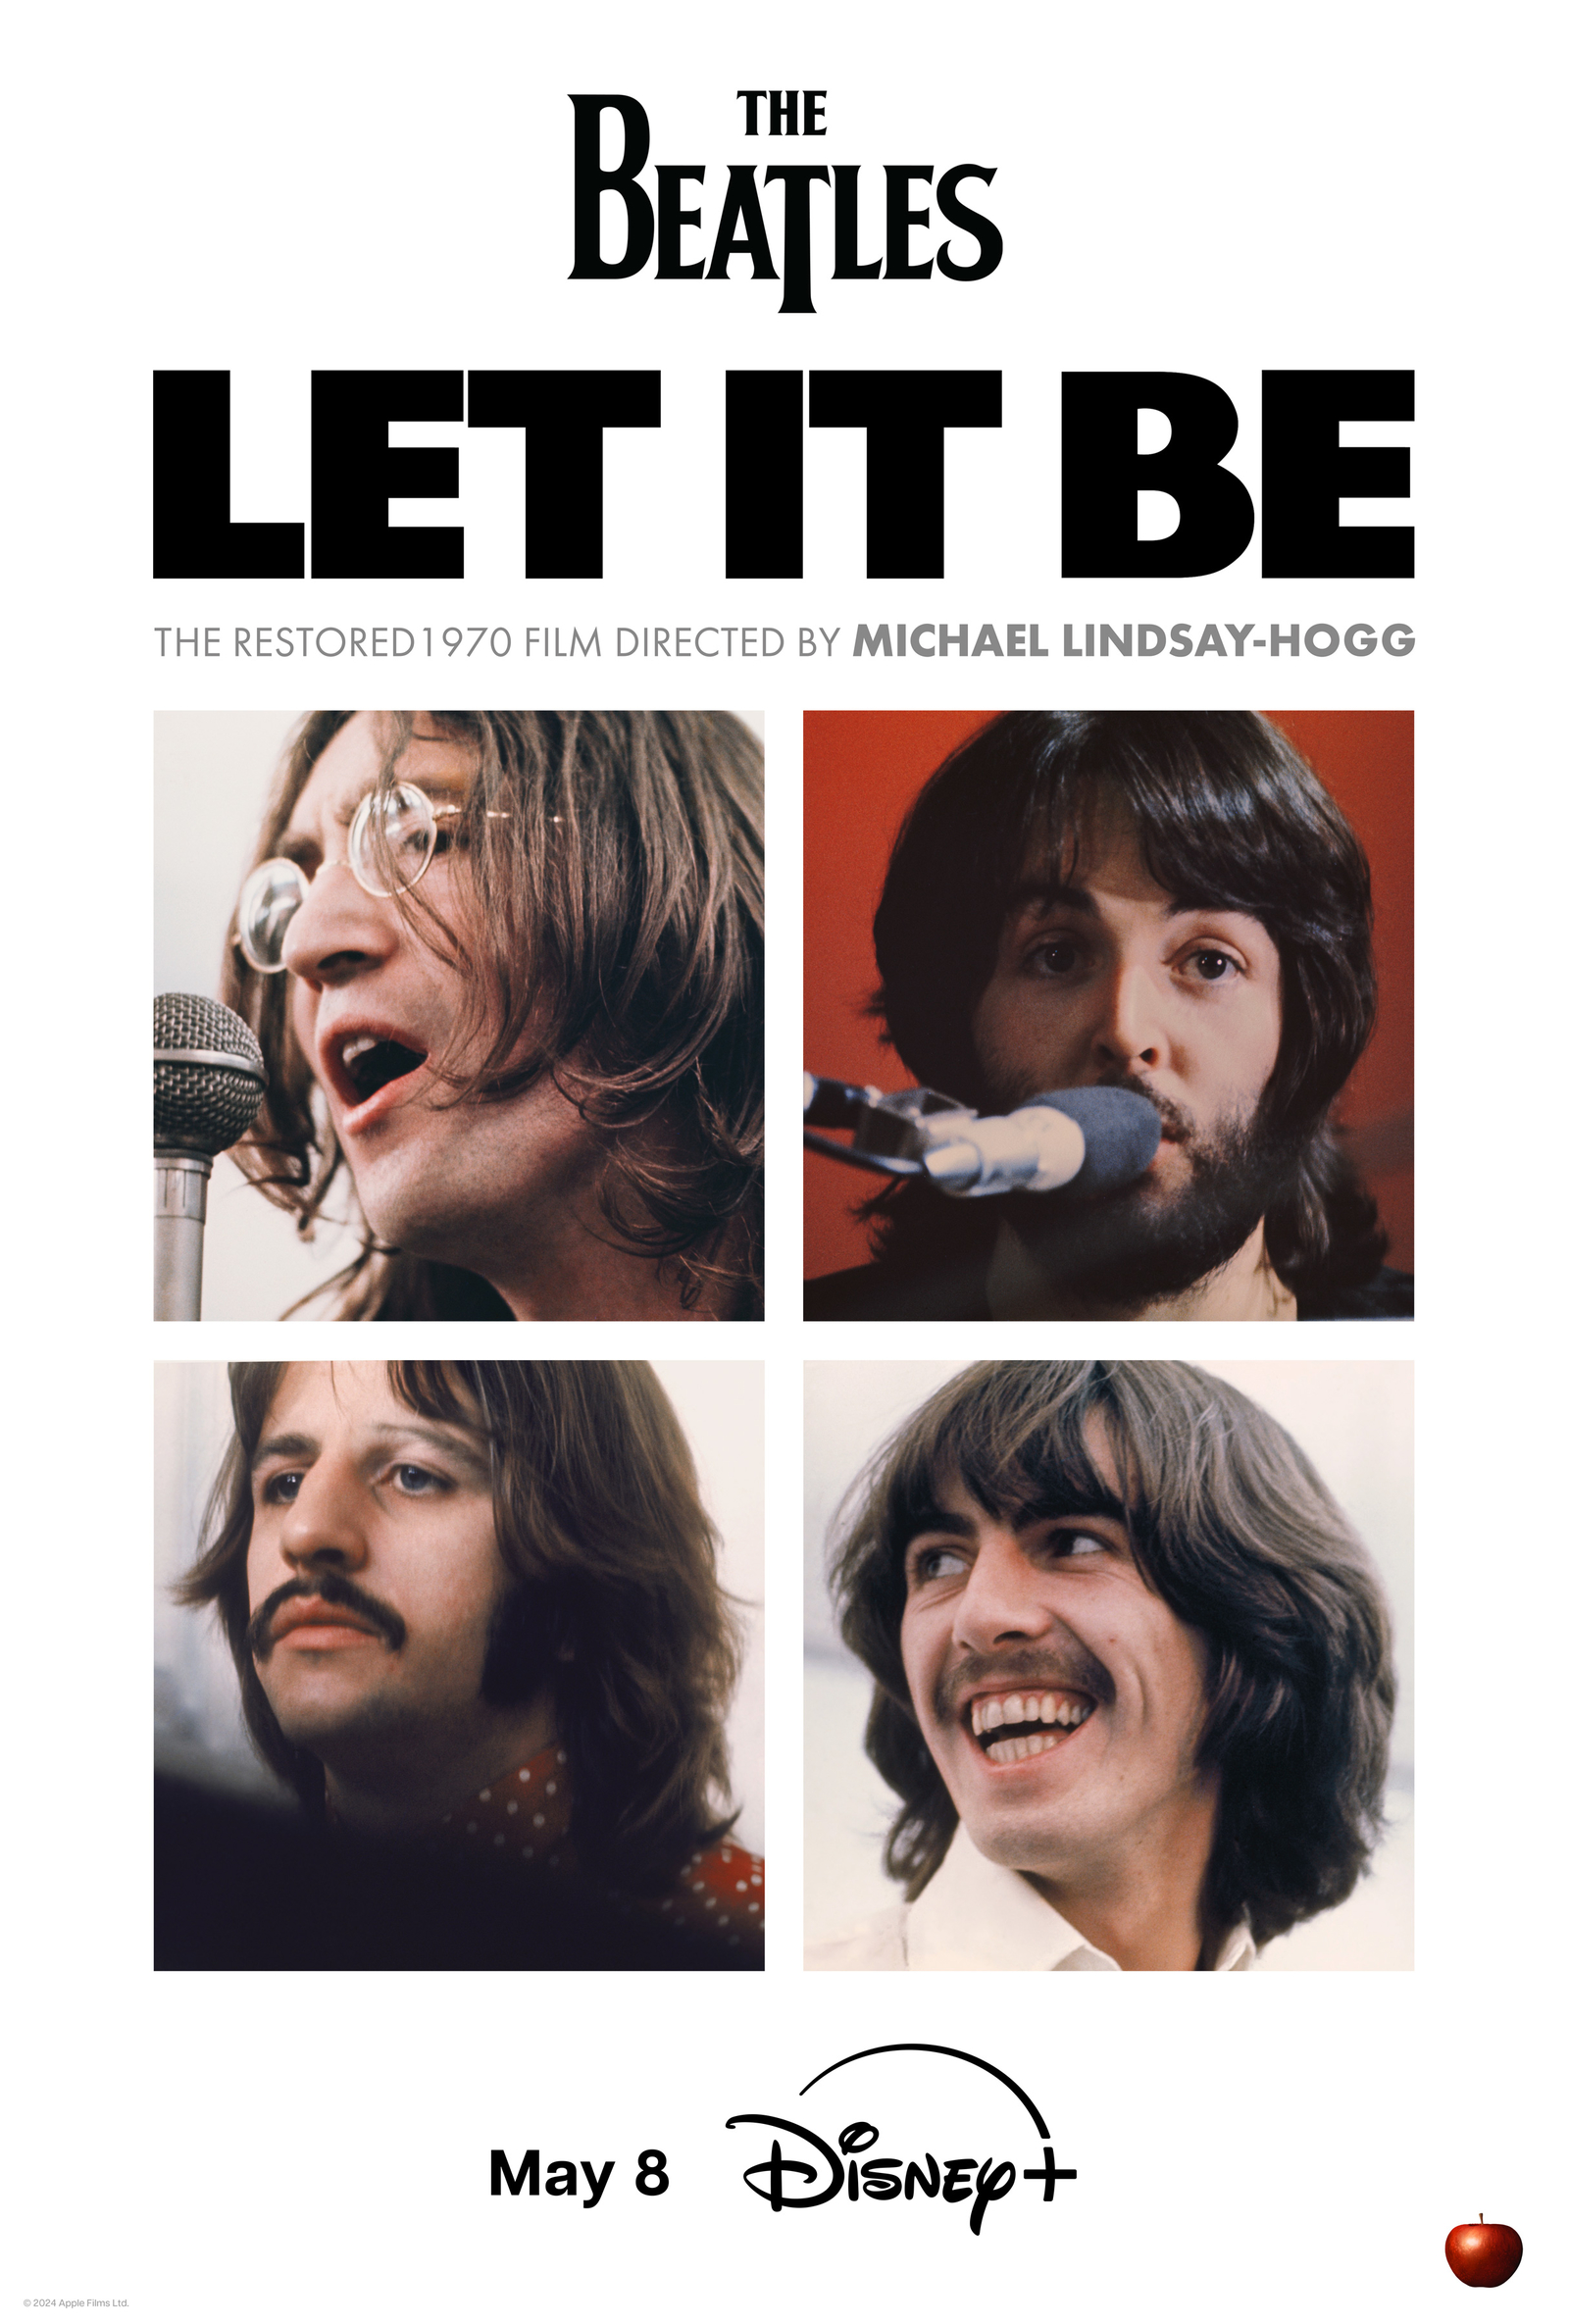 The Beatles documentary 